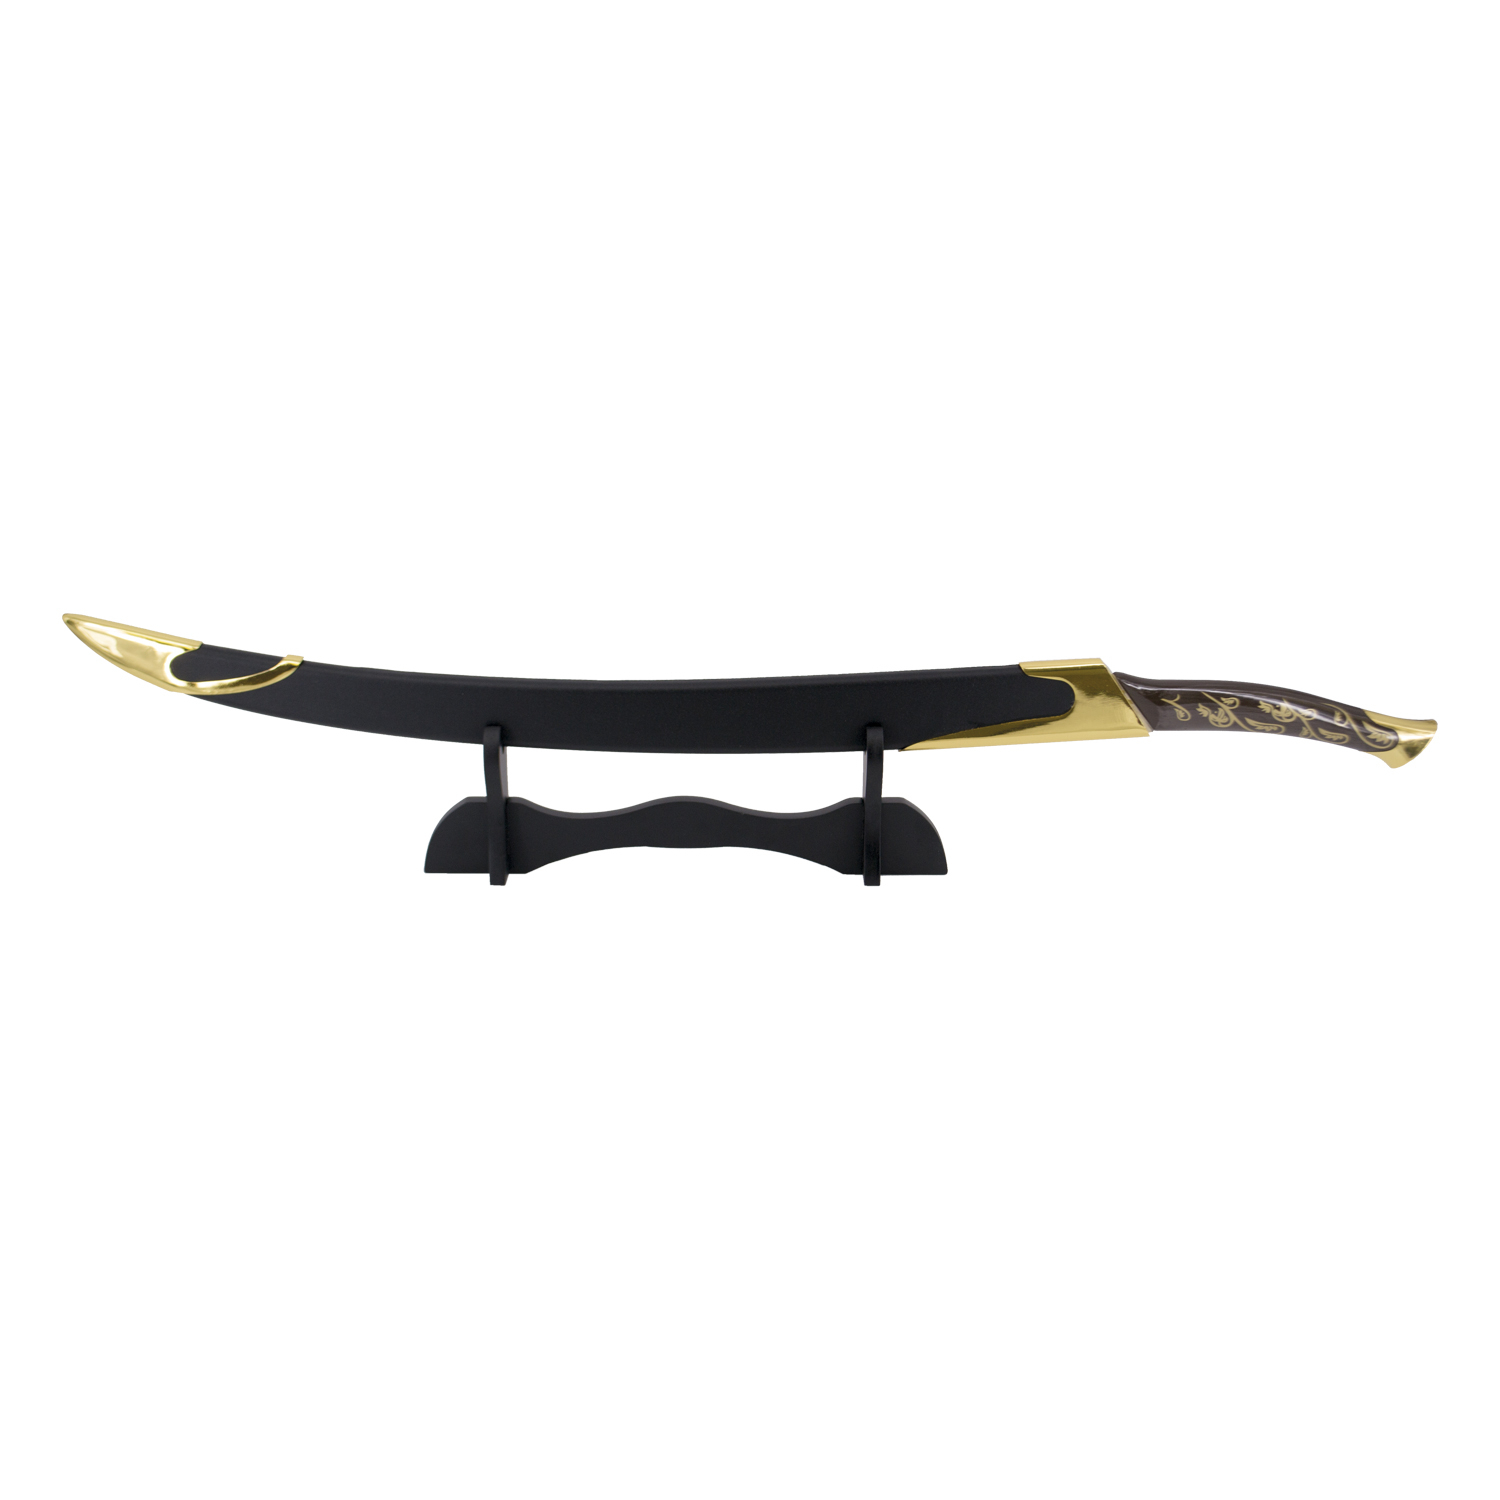 Espada Hadhafang de Arwen de 101 cm – Réplica